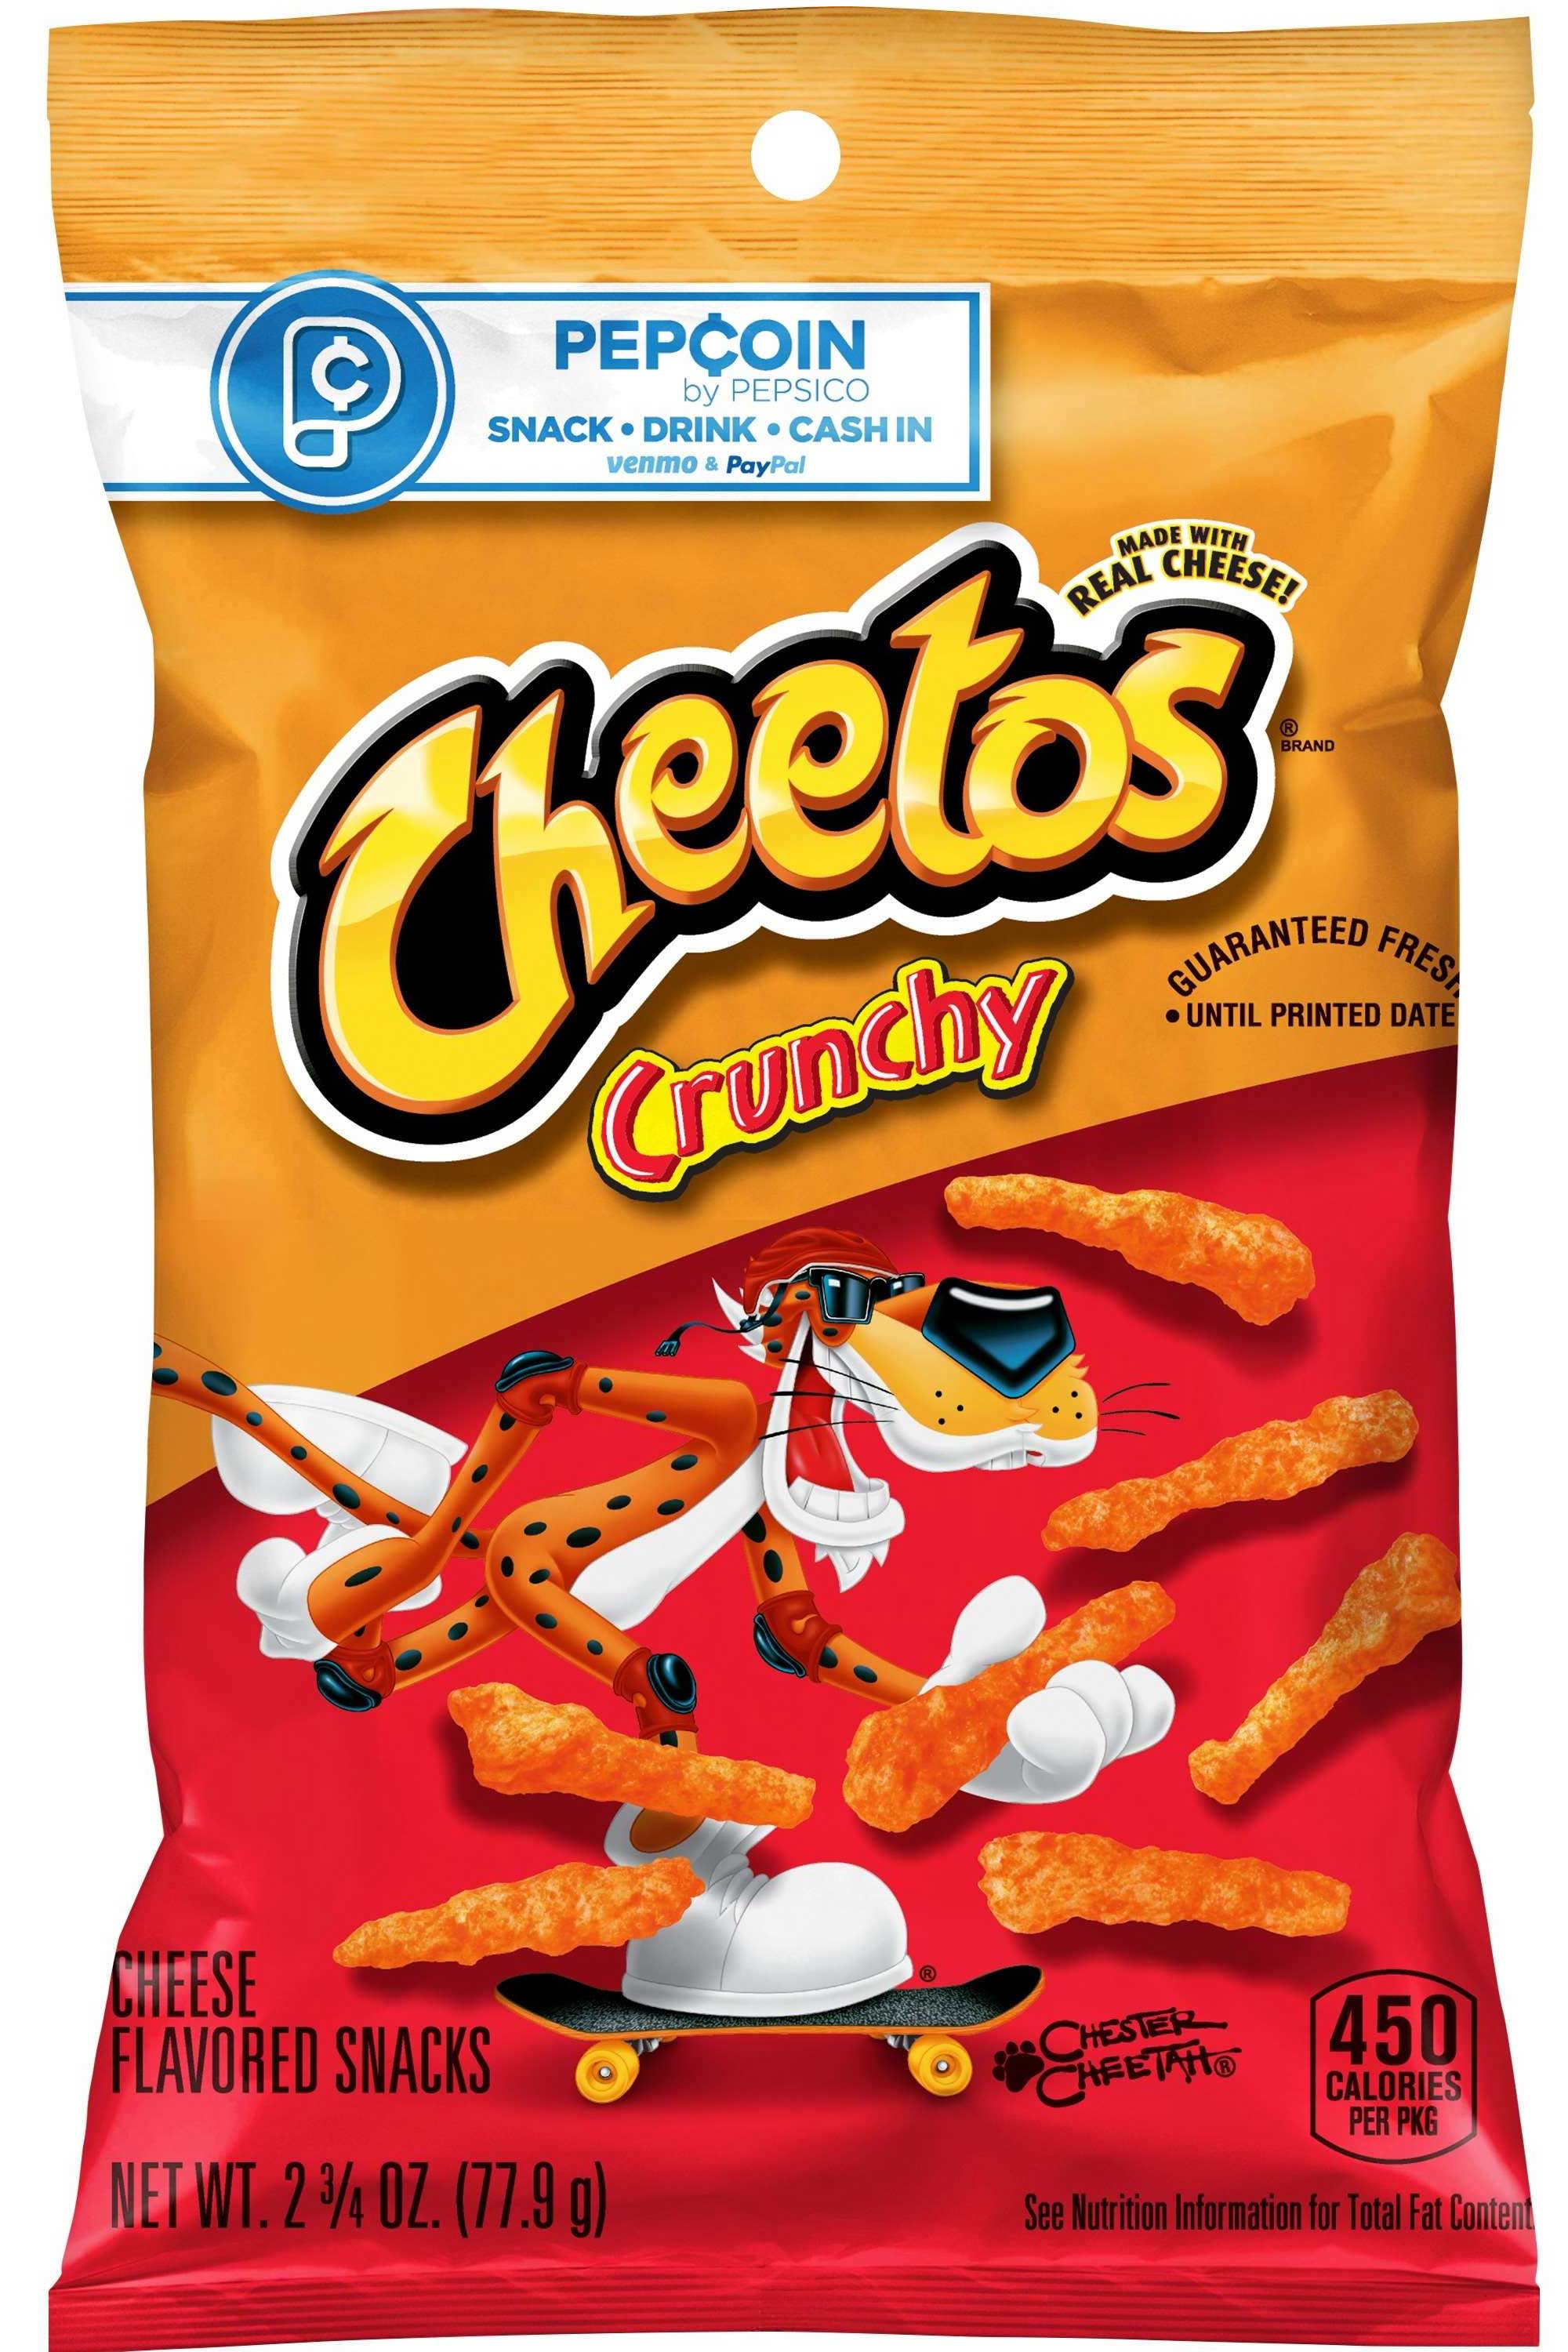 Cheetos Regular Crunchy Cheese Snacks